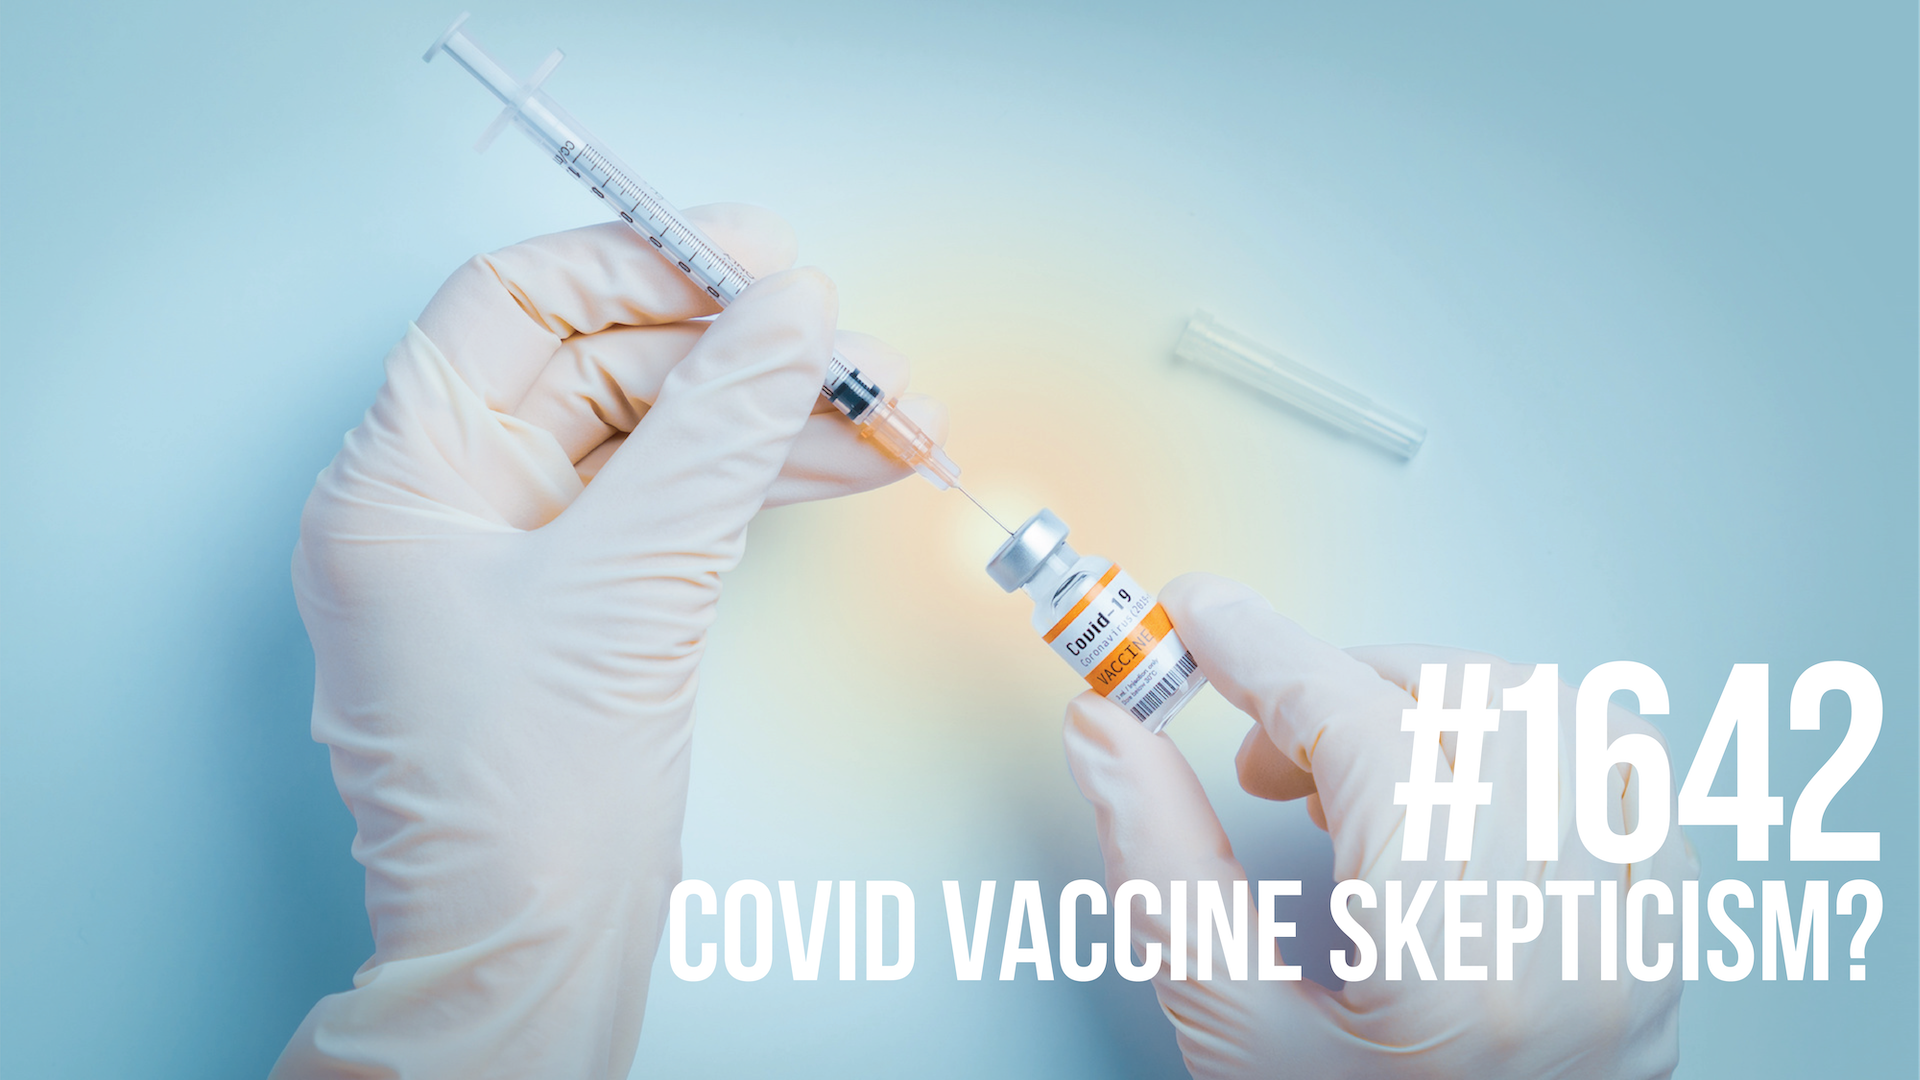 1642: COVID Vaccine Skepticism?